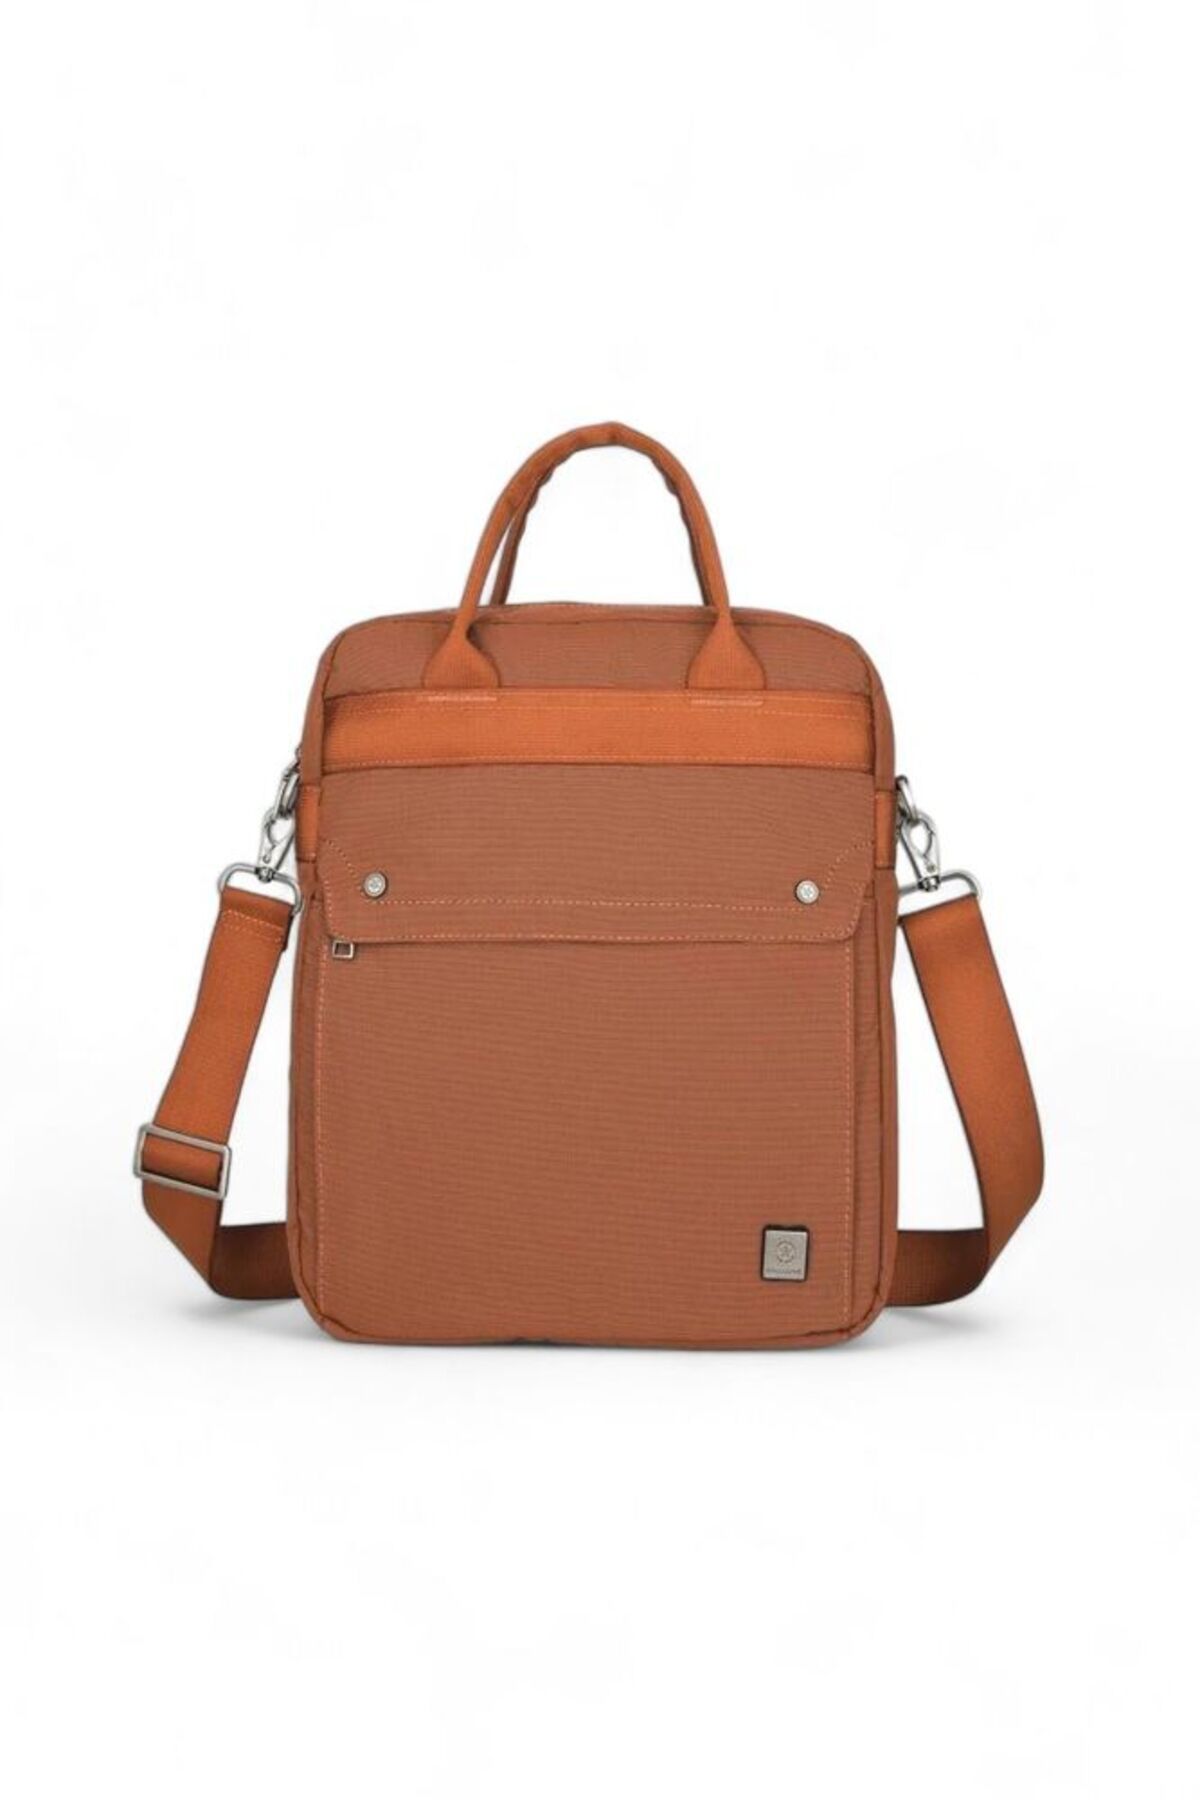 Smart Bags Exclusive Kiremit Unisex Laptop & Evrak Çantası Smb8707